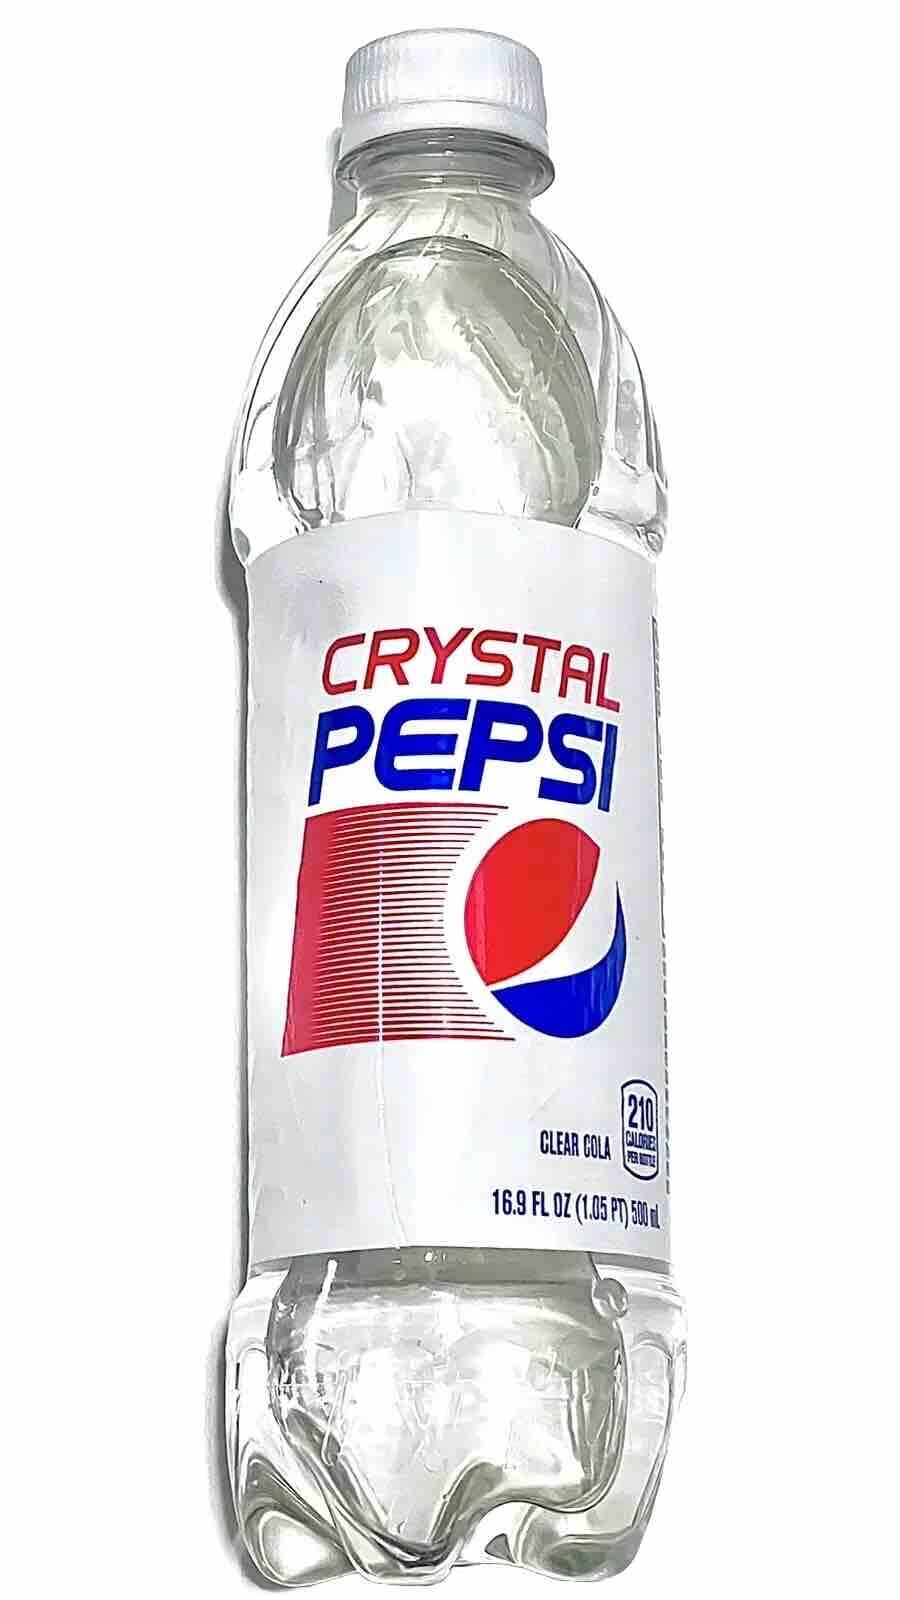 RARE Full Crystal Pepsi Clear Cola 17oz Bottle Limited Edition 2017 Alt Image